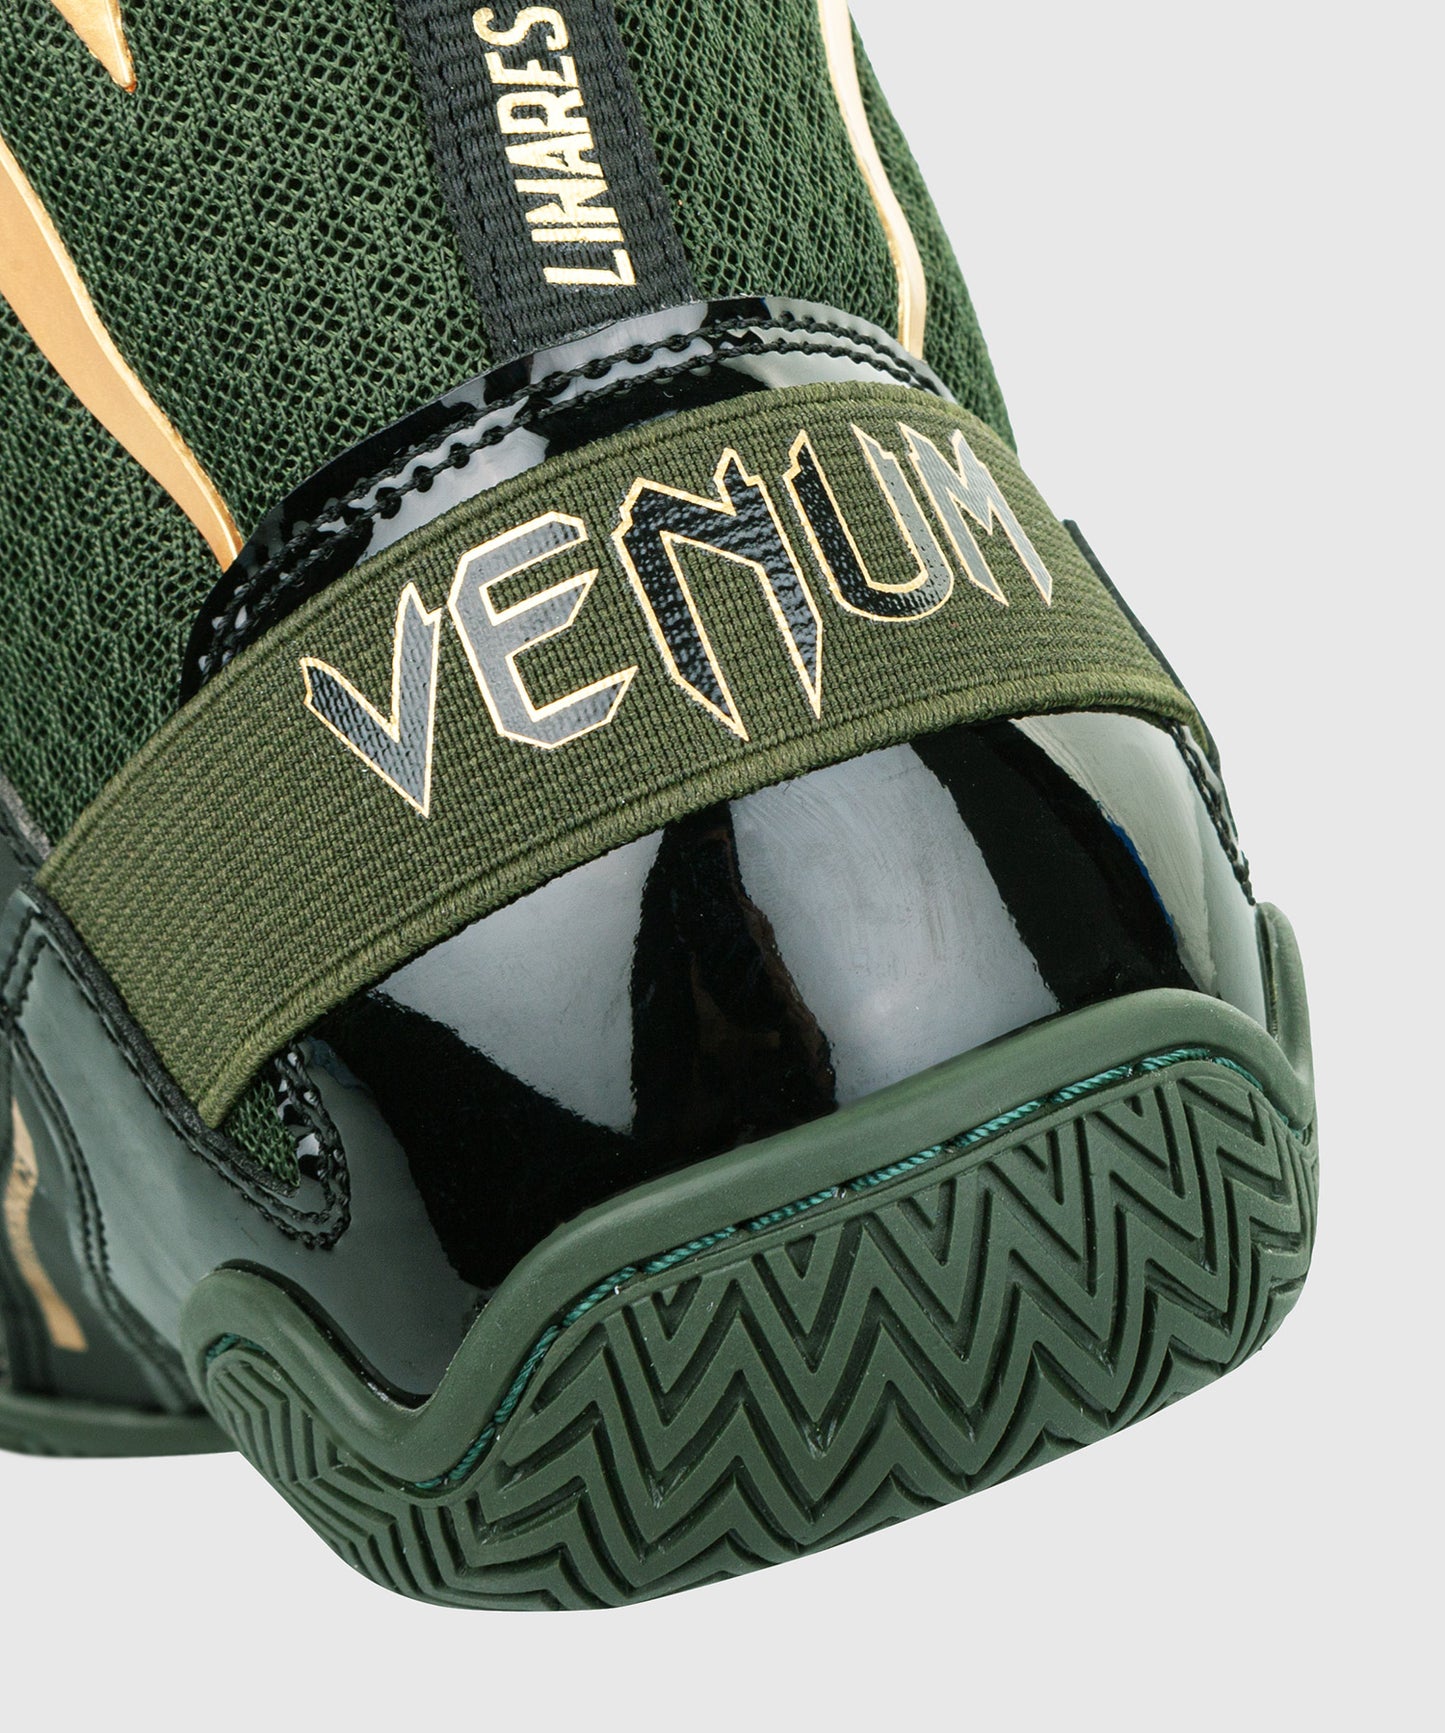 Chaussures de boxe Venum Elite Evo Linares Edition